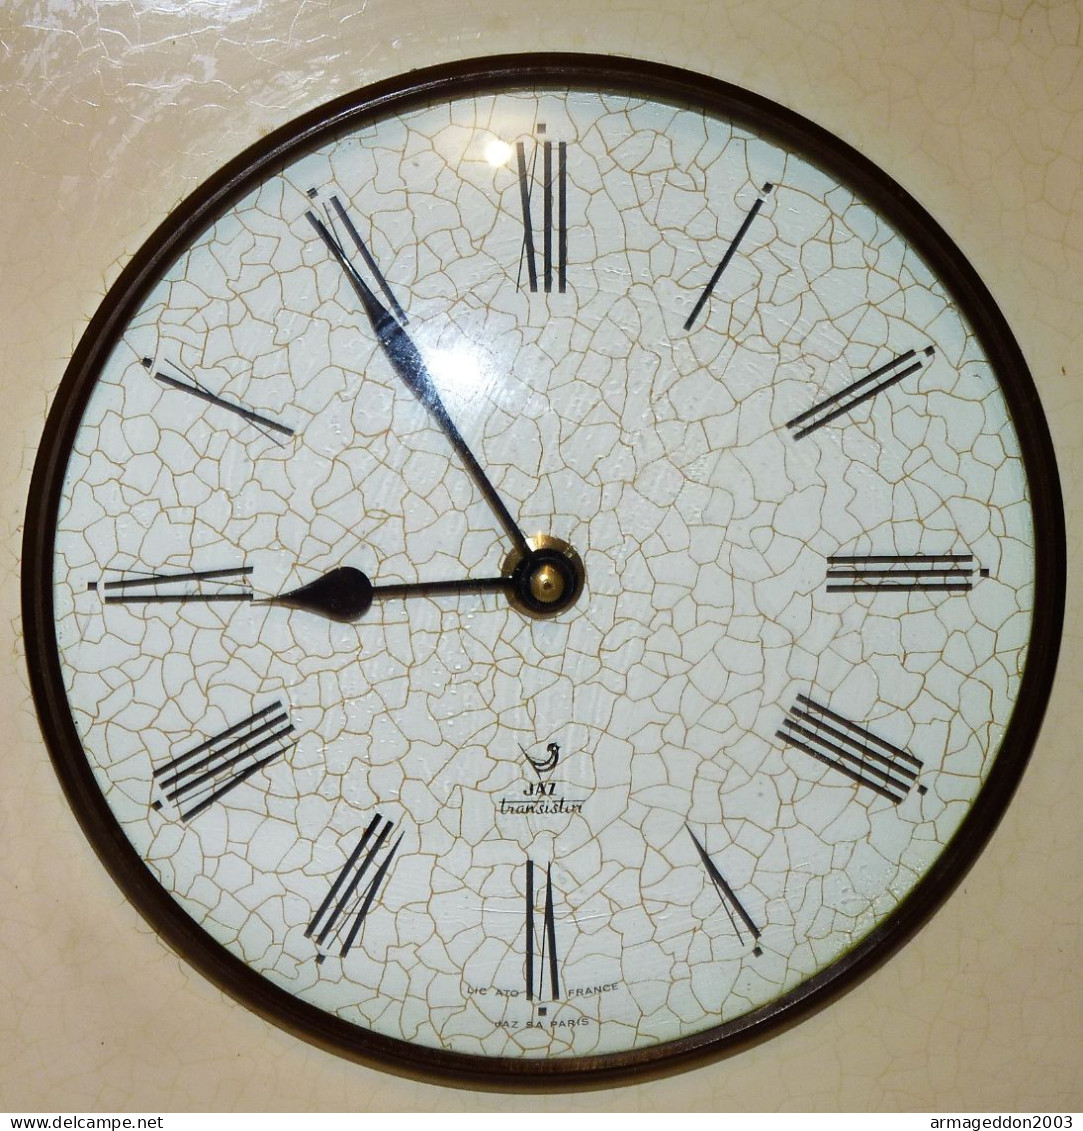 ANCIENNE PENDULE HORLOGE EN TOLE JAZ TRANSISTOR LIC ATO FONCTIONNE - Clocks